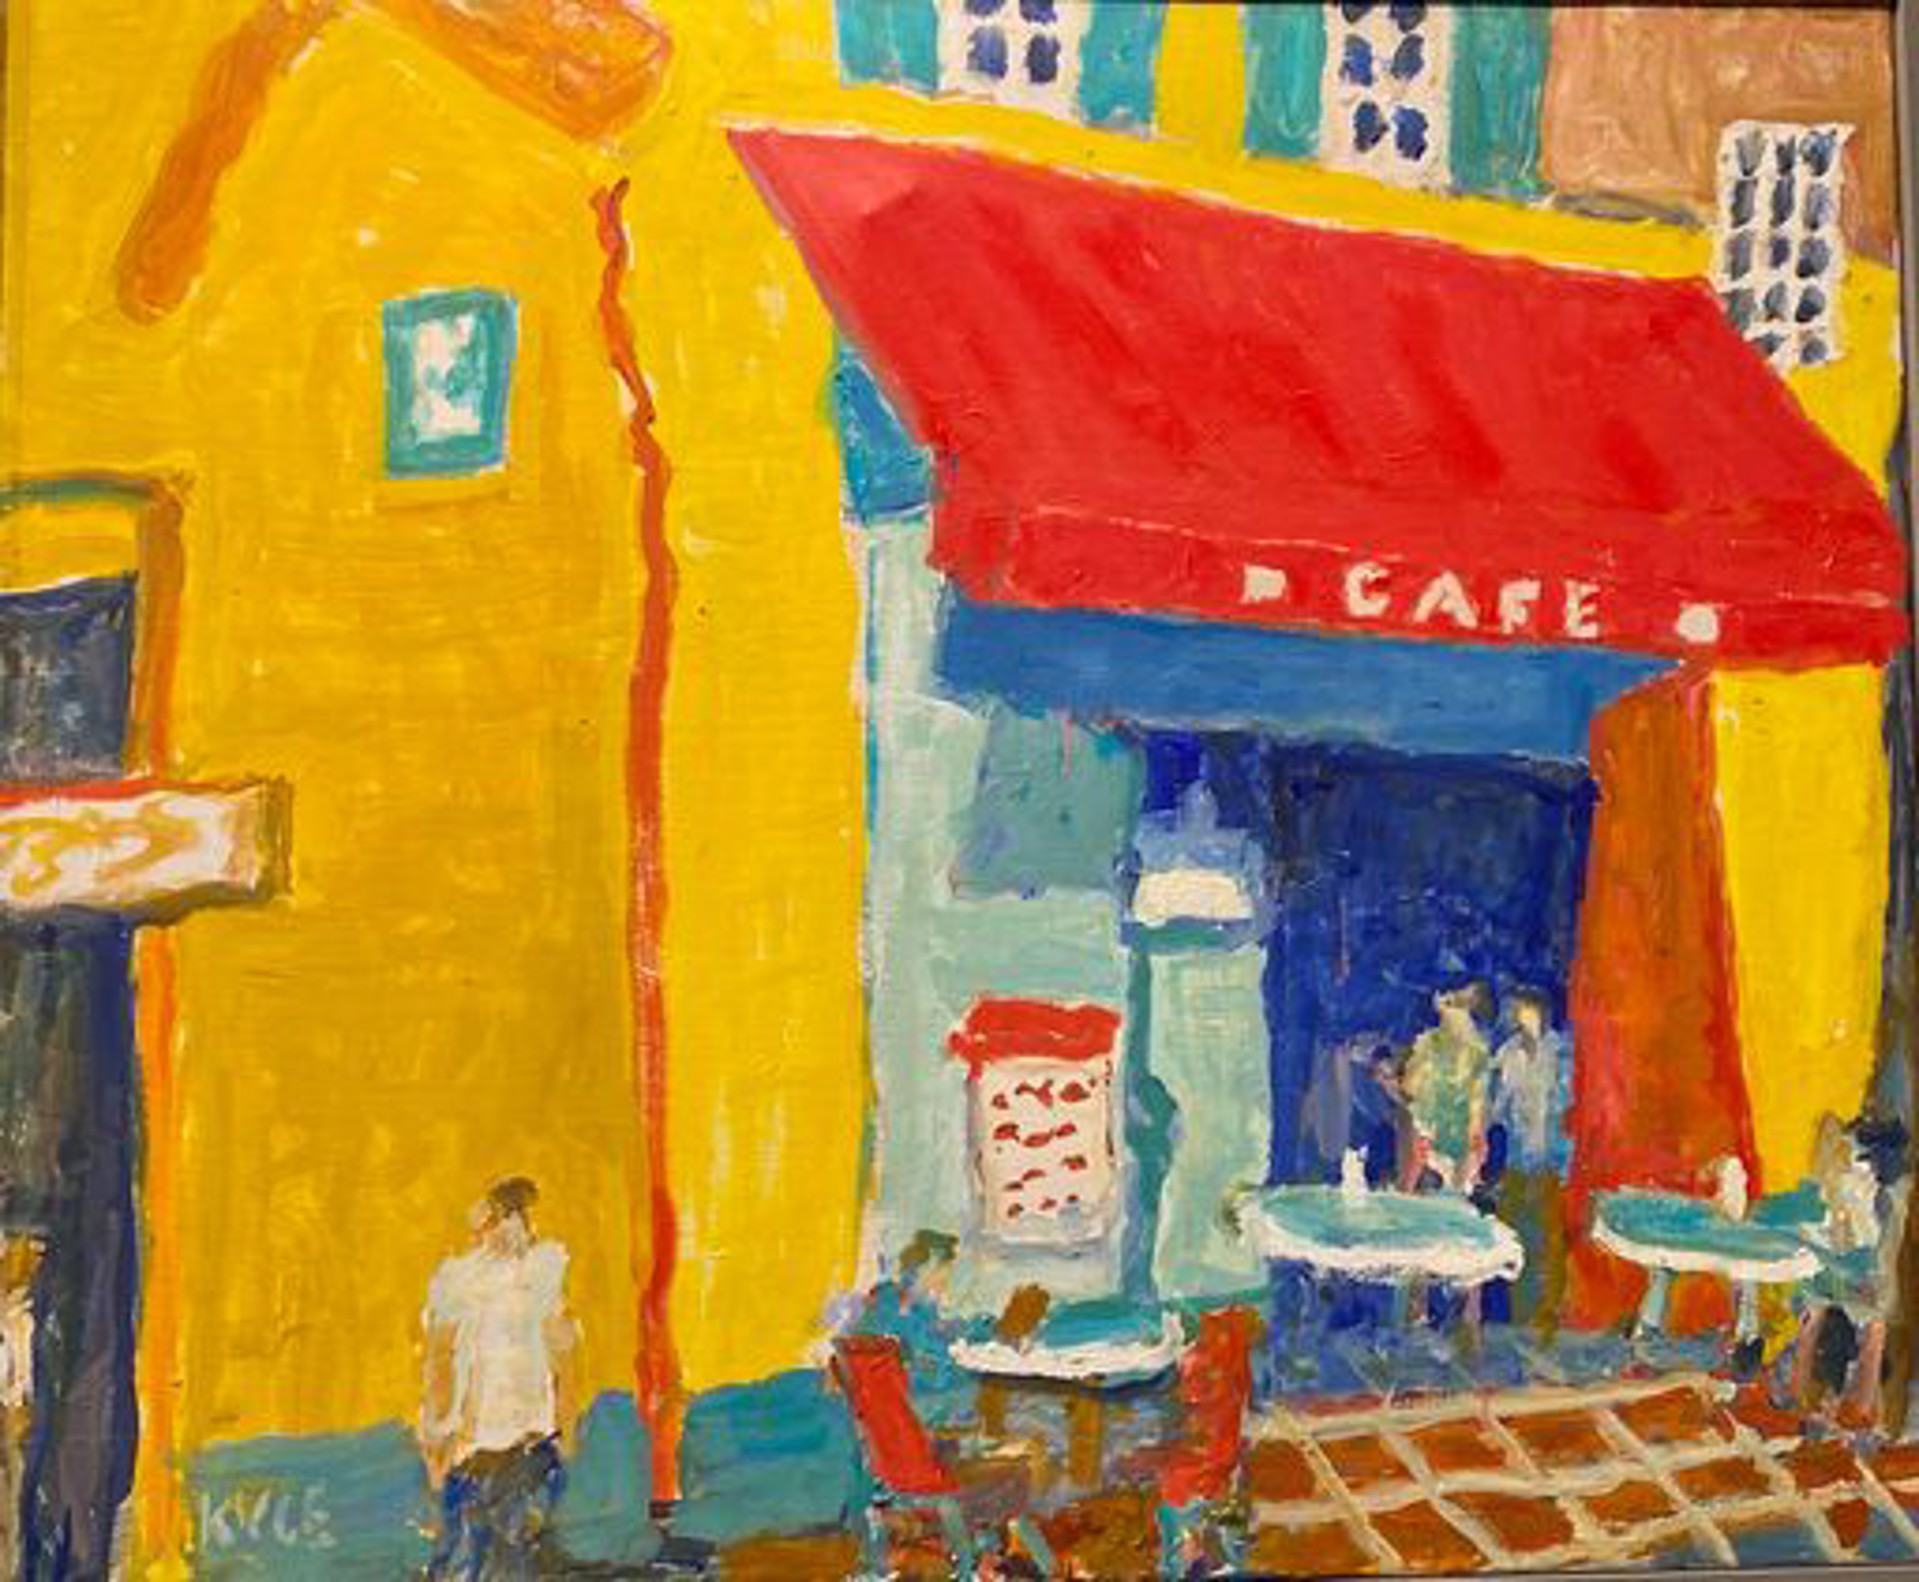 Cafe by Kyle Highsmith